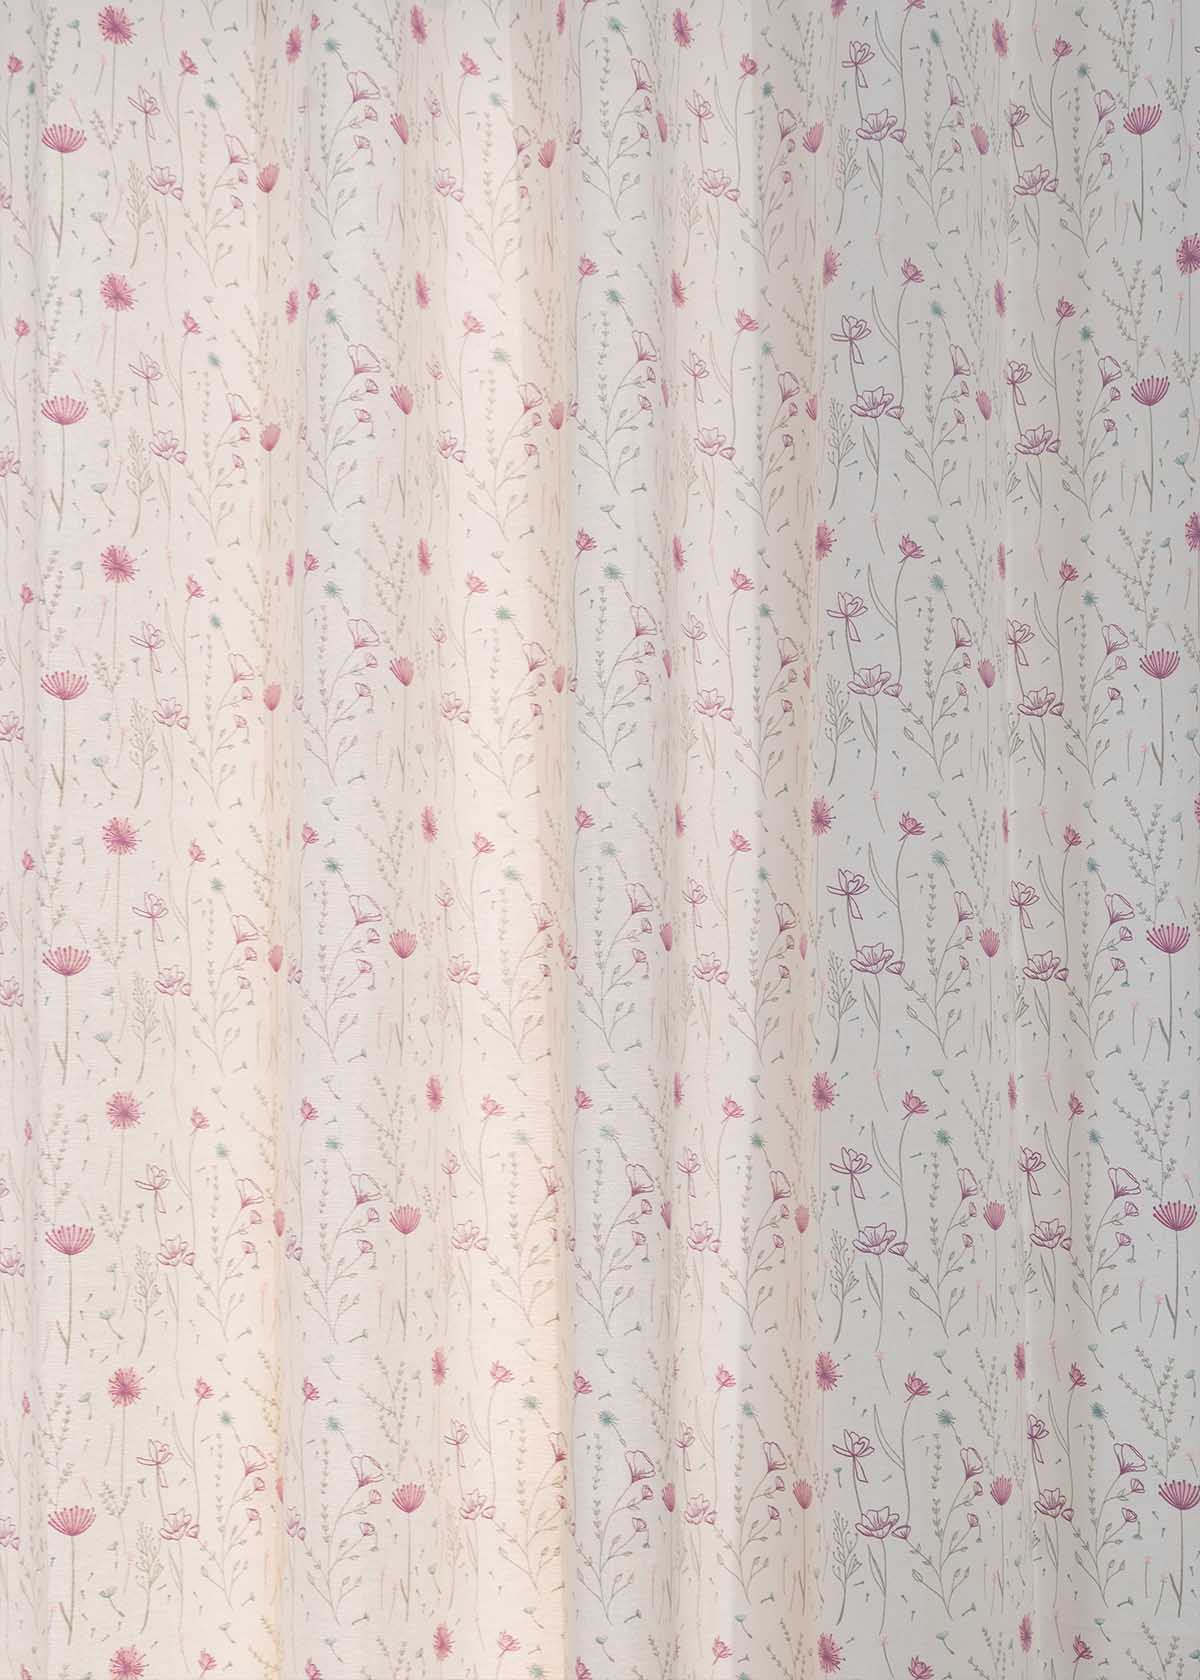 Drifting Dandelion 100% cotton floral curtain for kids room, living room - Room darkening - Lavender - Pack of 1